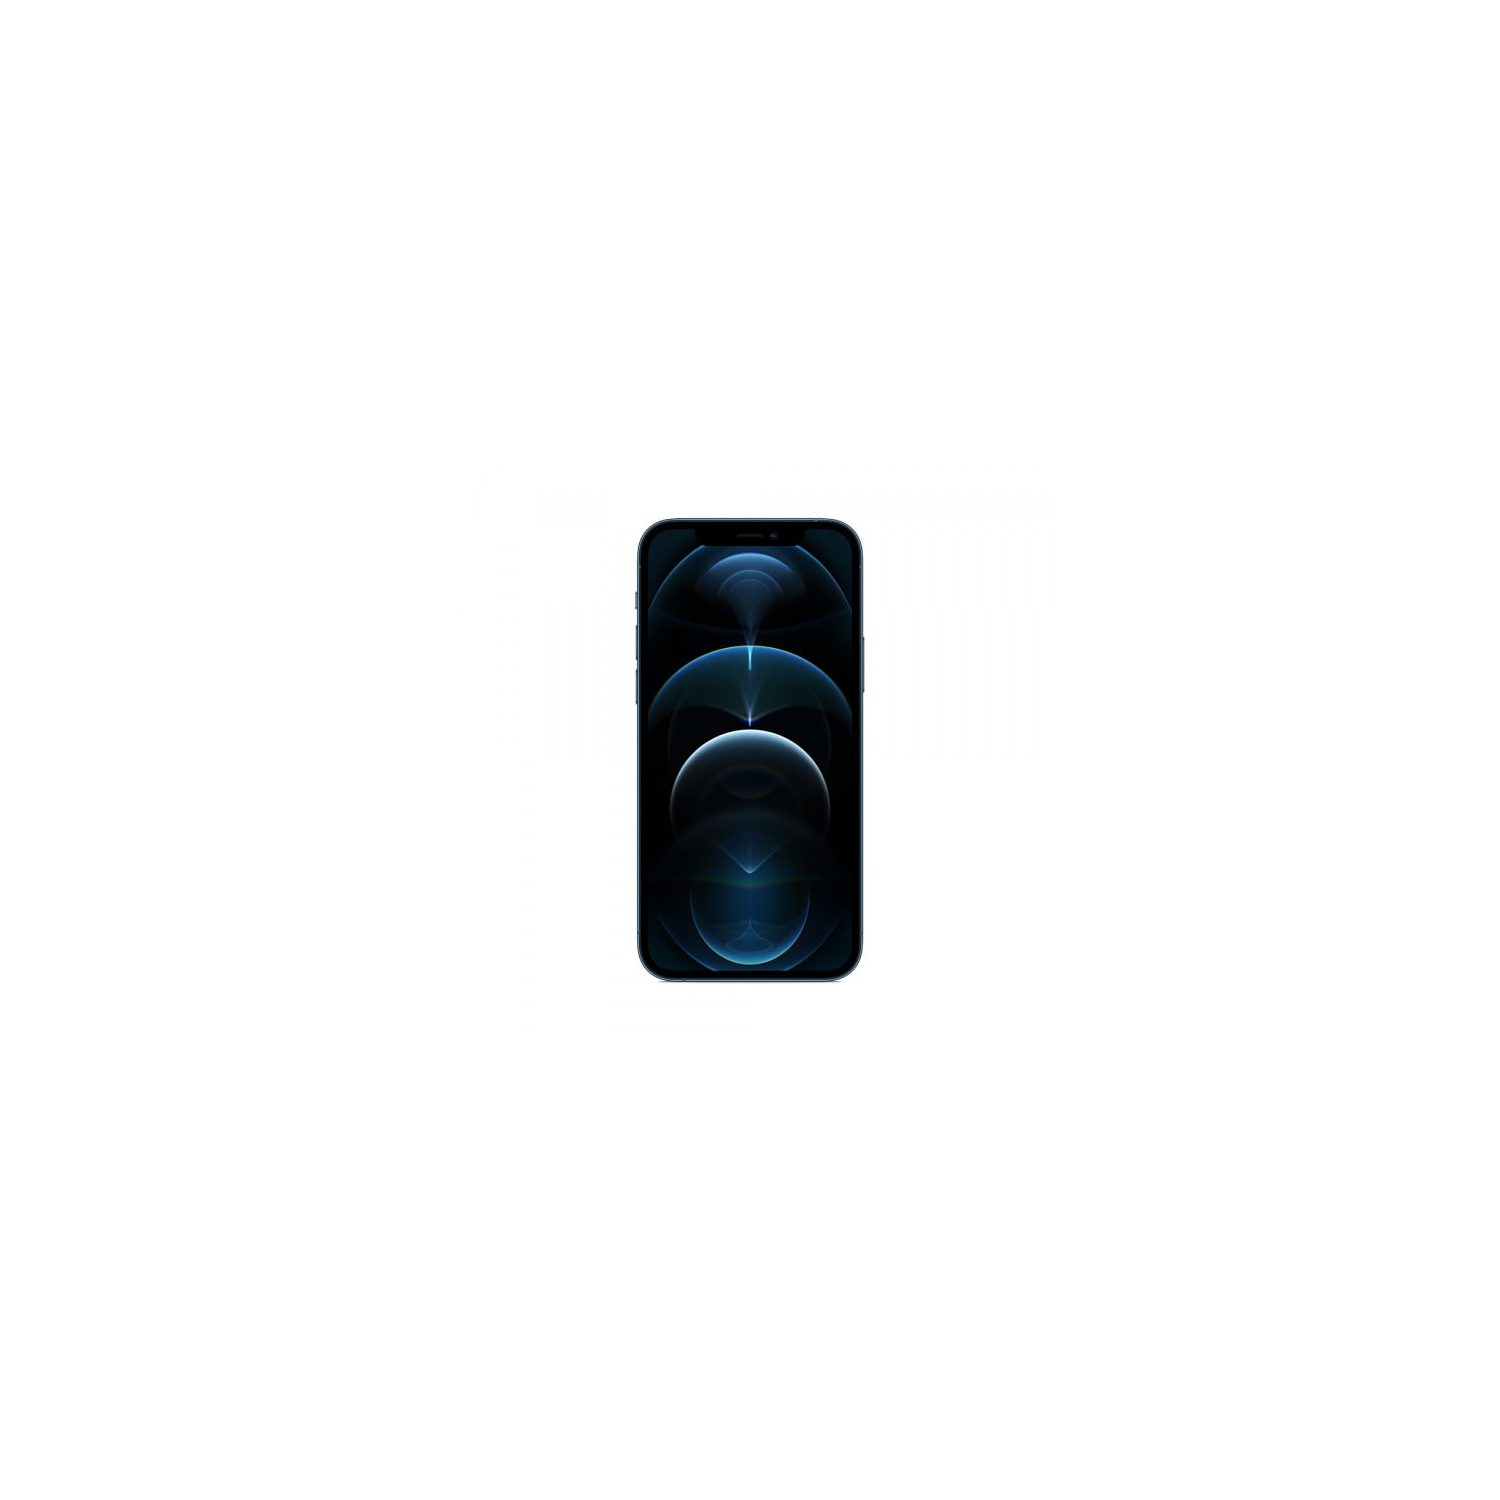 Apple iPhone 12 Pro 256GB - Pacific Blue - Unlocked - Open Box